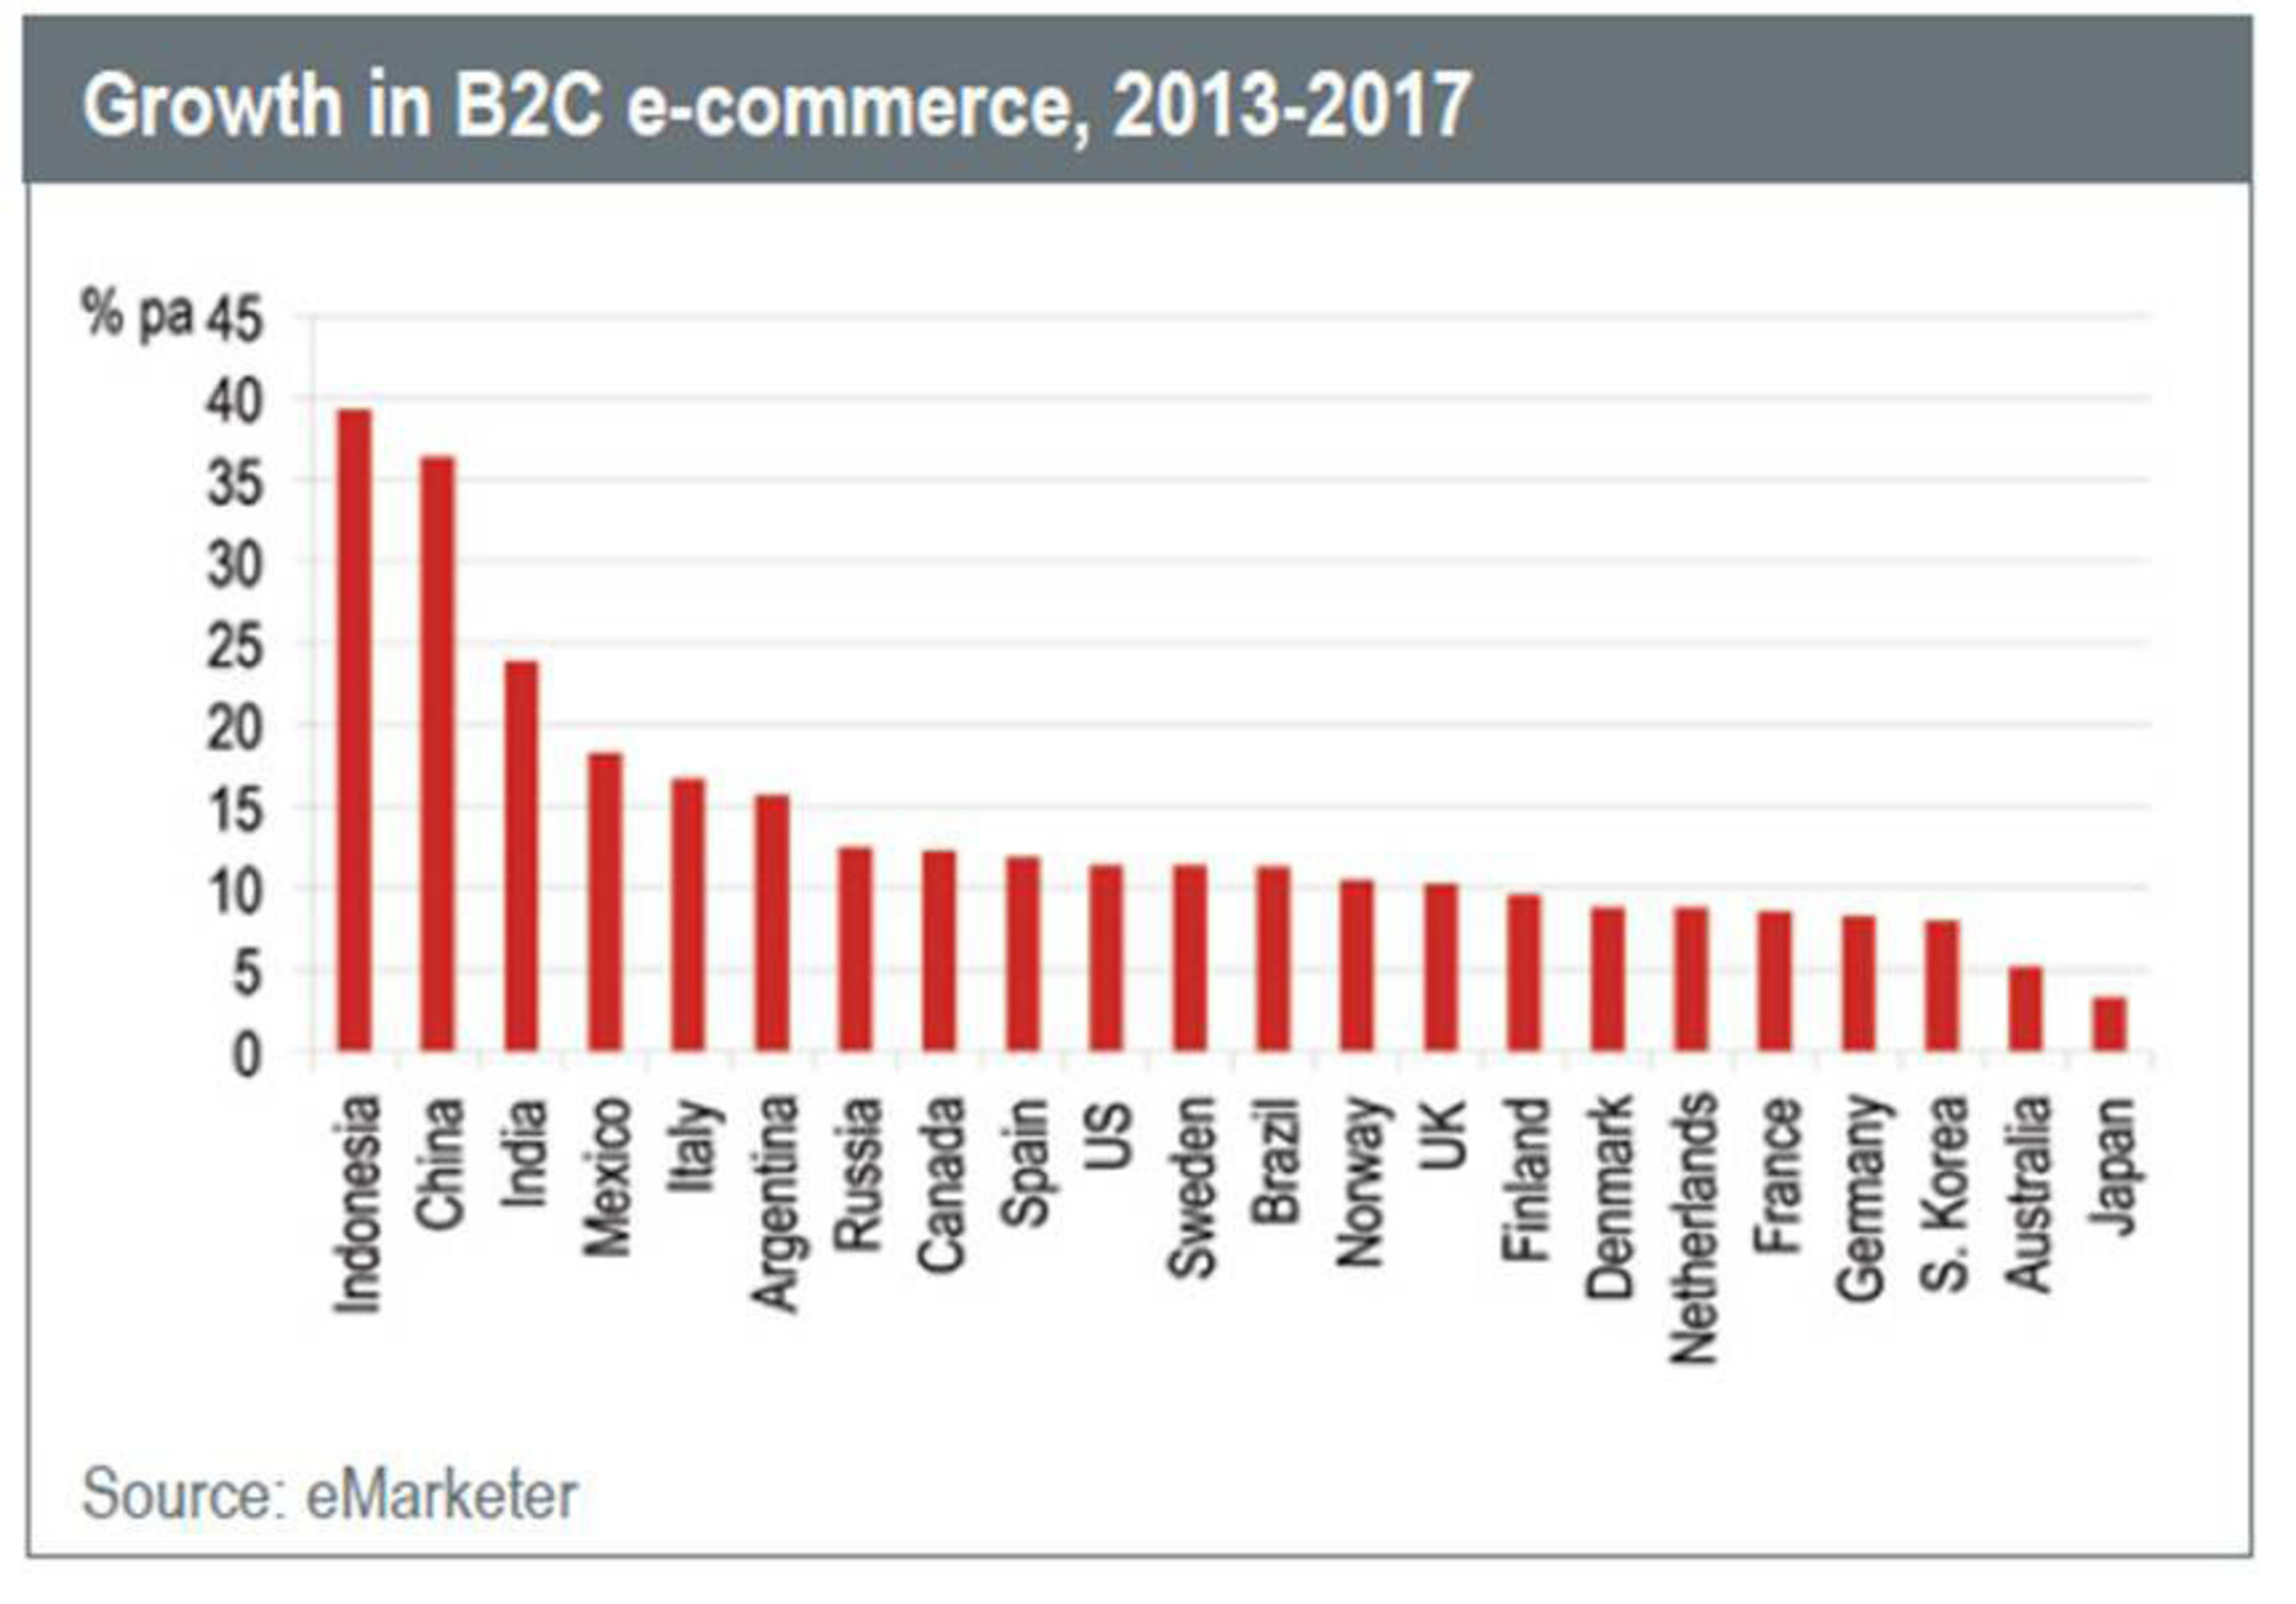 Growth in B2C e-commerce, 2013-2017. (PRNewsFoto/Jones Lang LaSalle) (PRNewsFoto/JONES LANG LASALLE)